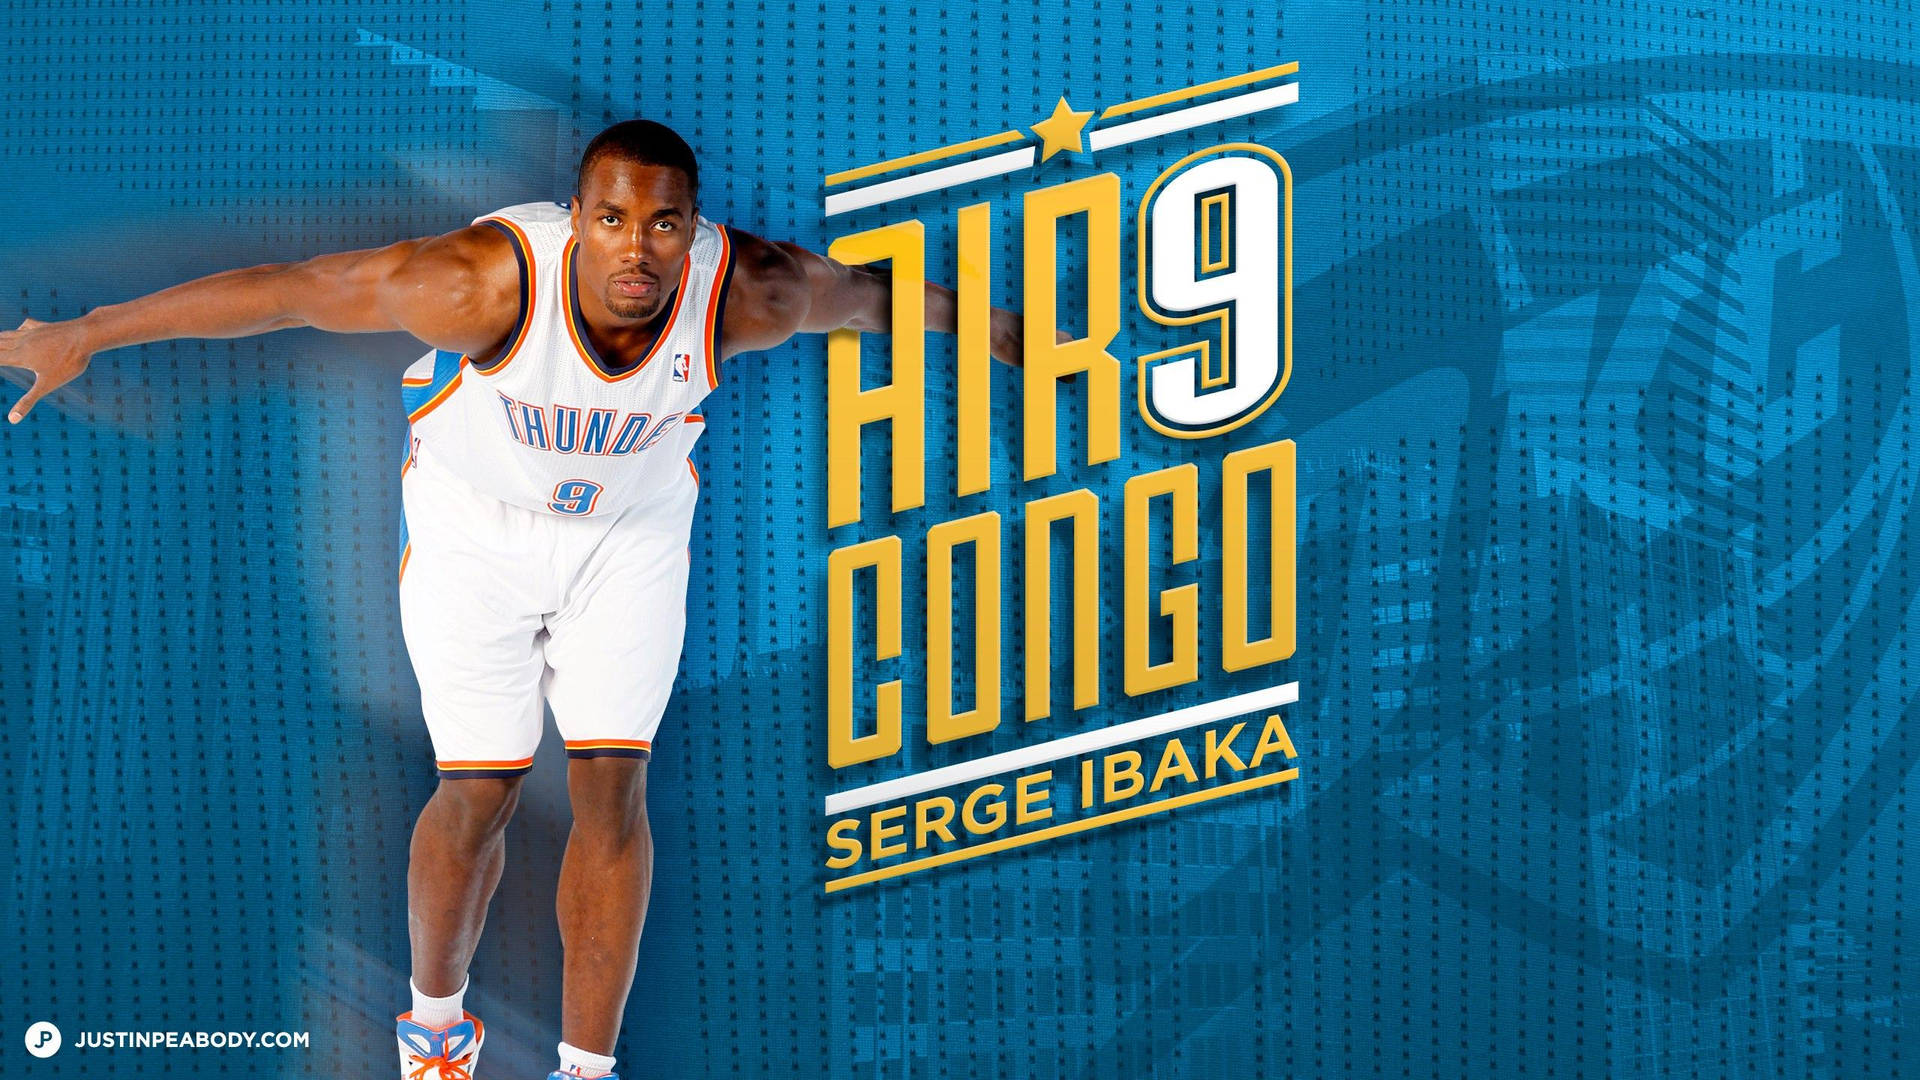 Serge Ibaka Air Congo Poster Background